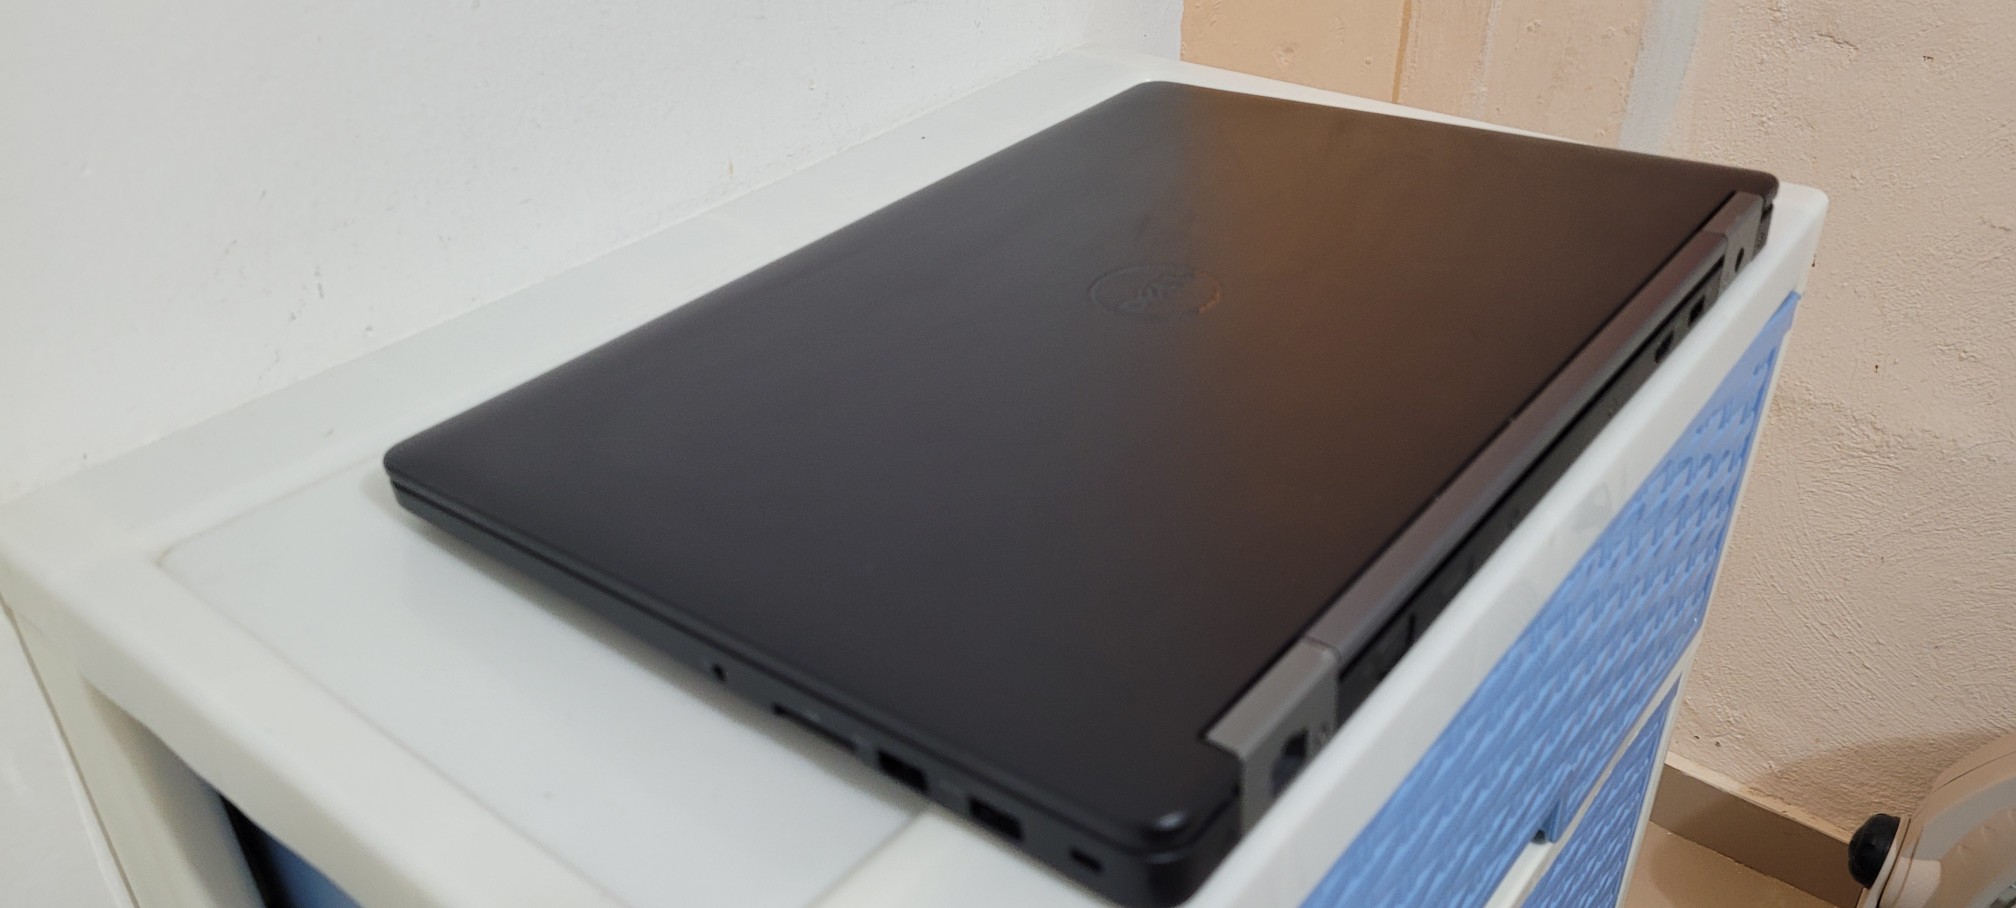 computadoras y laptops - Dell Slim 14 Pulg Core i7 6ta Gen Ram 8gb ddr4 Disco 256gb SSD Solido full 1080p 2